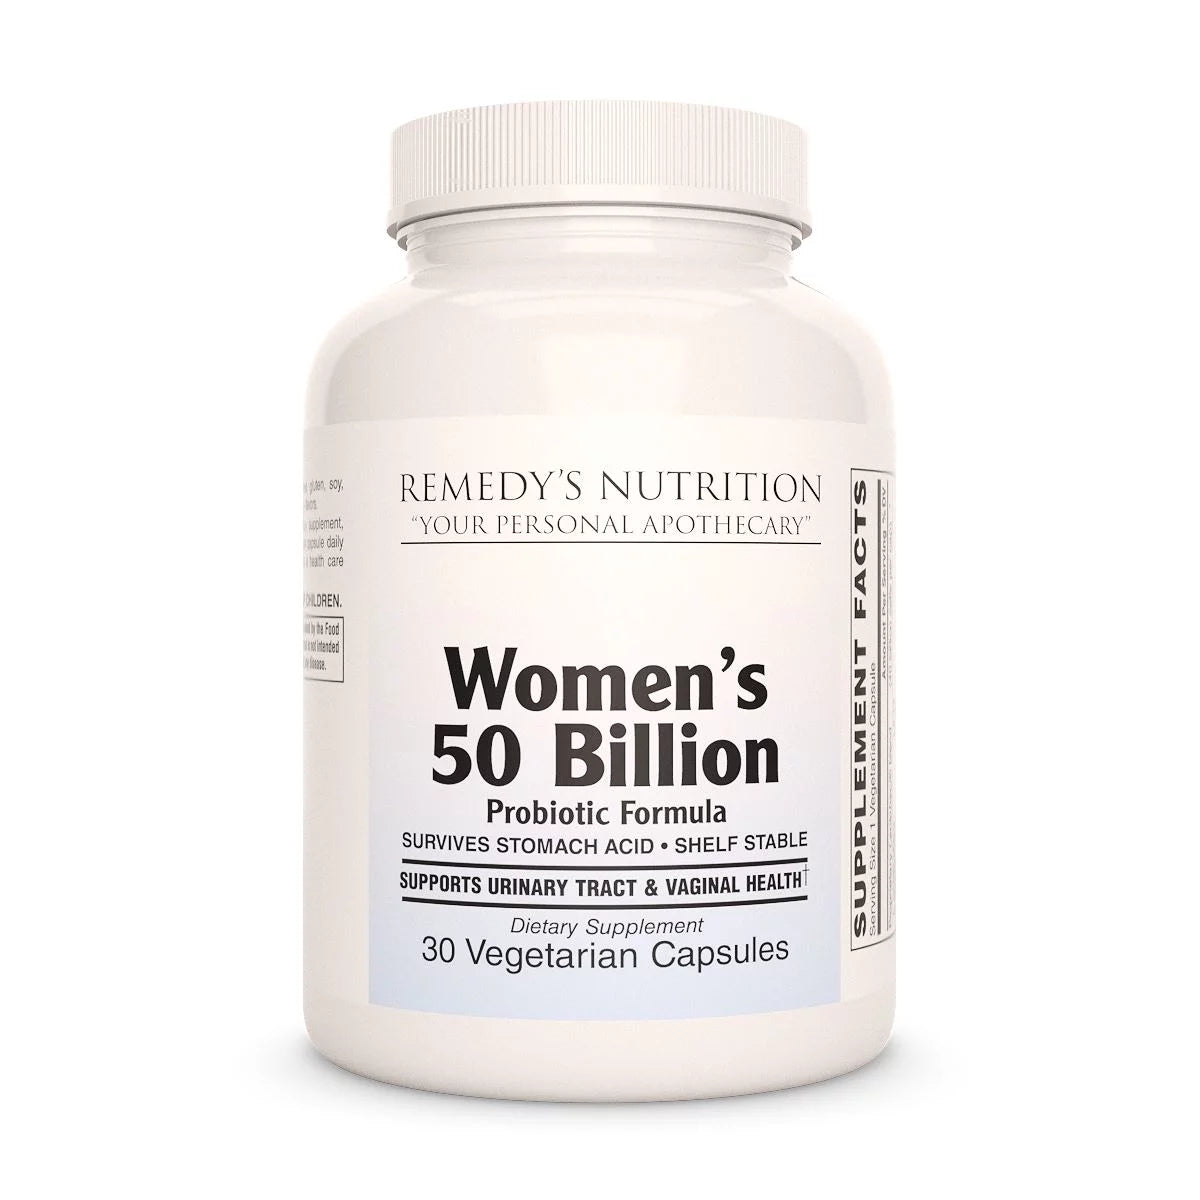 Image of Remedy's Nutrition® Women's 50 Billion™ Probiotic Capsules Dietary Supplement front bottle. 50 Billion Cultures. 